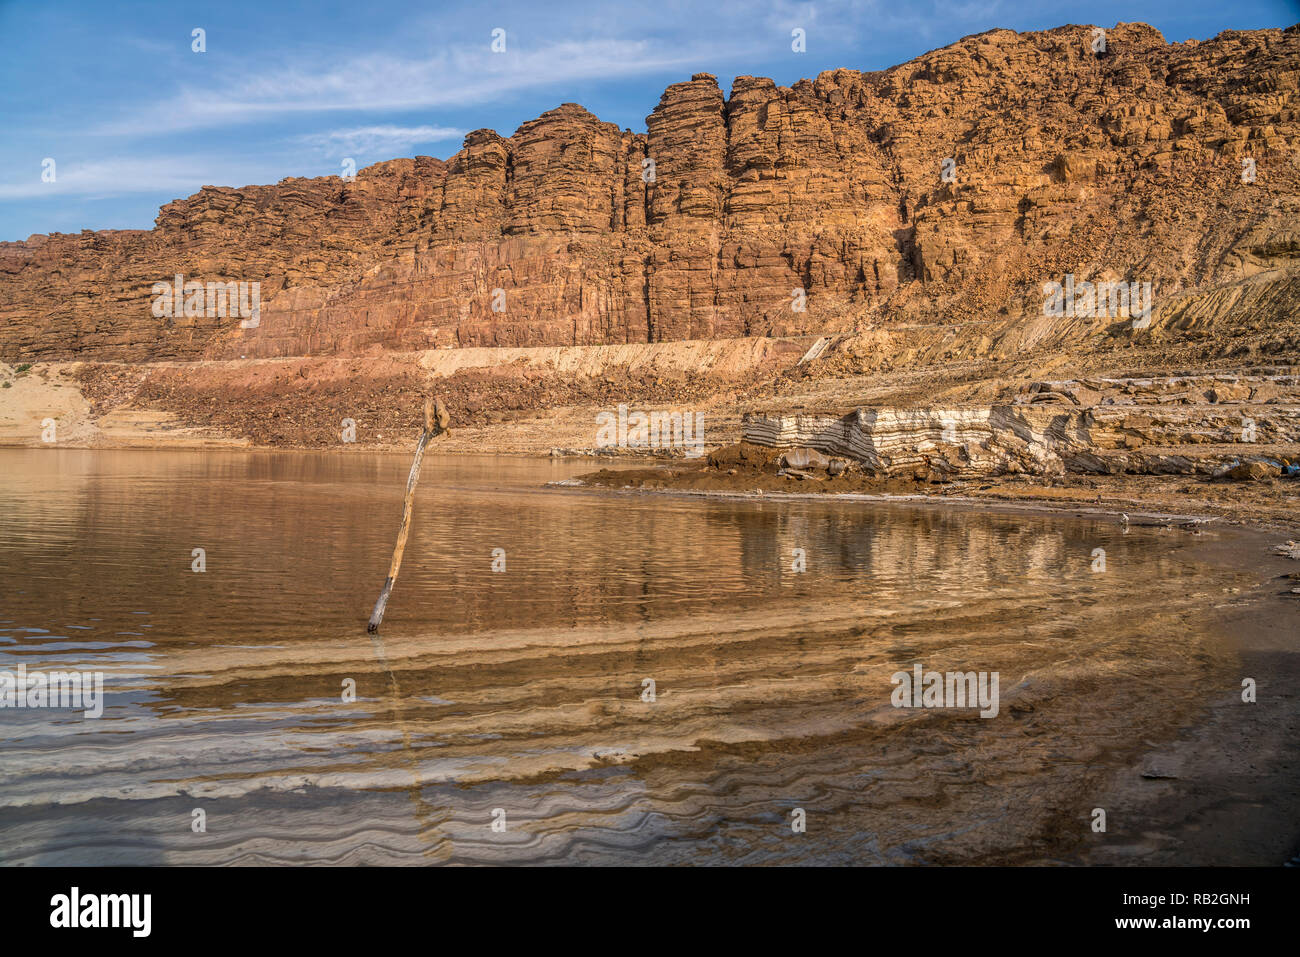 Landschaft am Ufer des Toten Meer, Jordanien, Asien  |  landscape at the Jordanian shore of the Dead Sea, Jordan, Asia Stock Photo